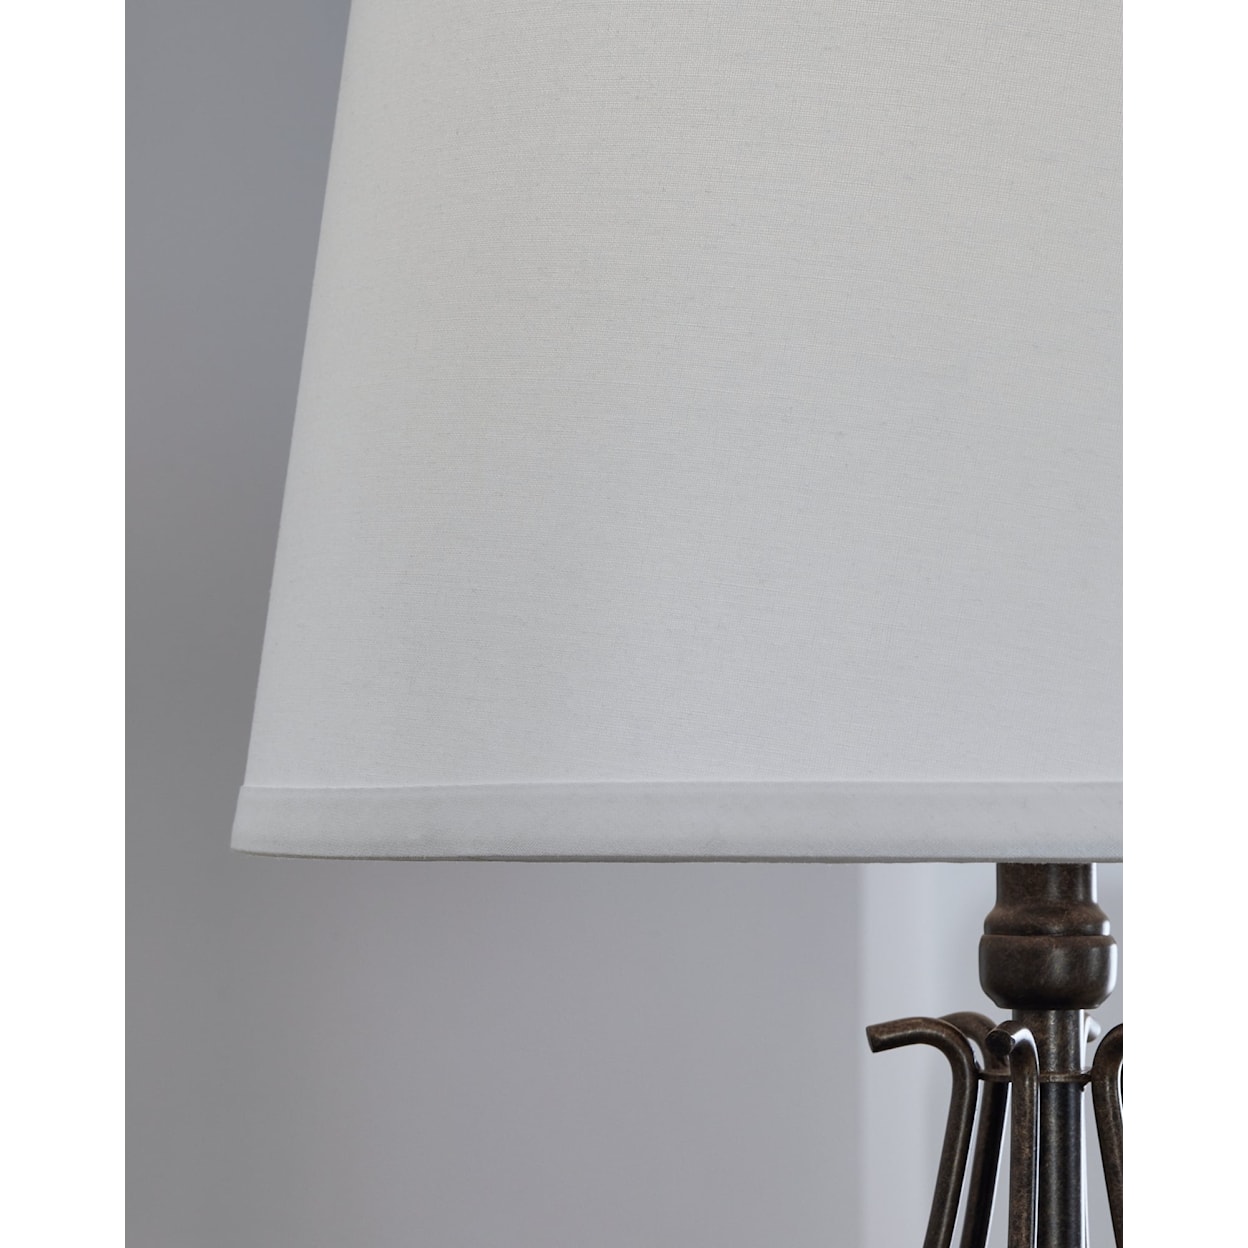 Michael Alan Select Brycestone Metal Floor Lamp with 2 Table Lamps